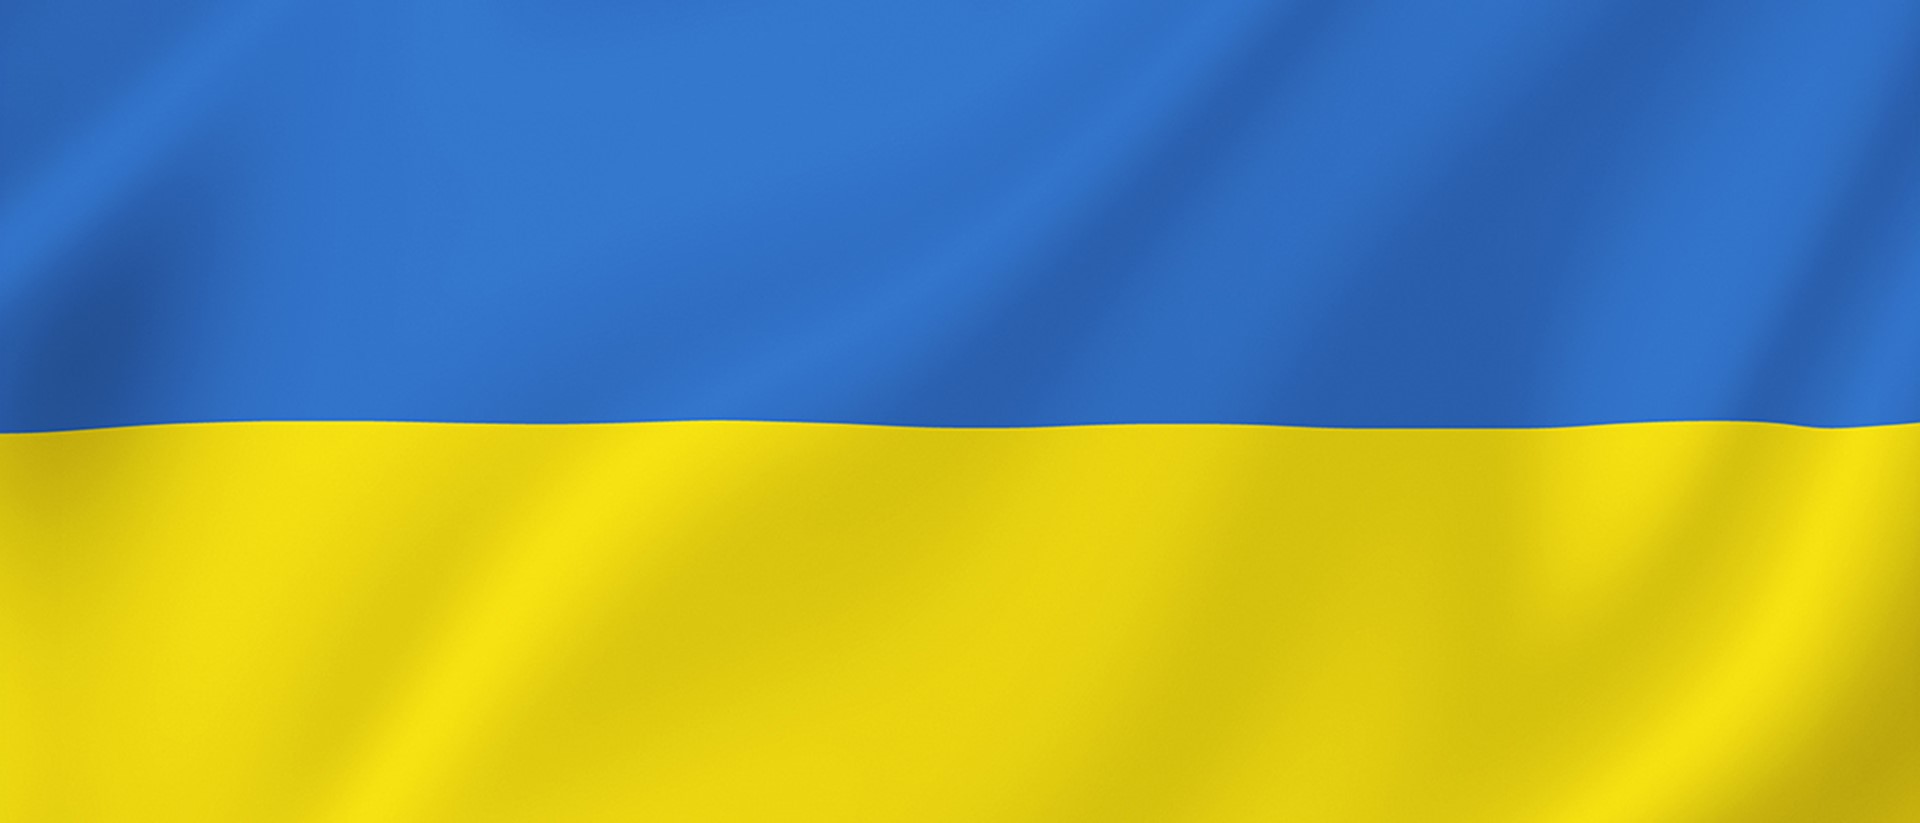 Image of the Ukrainian flag